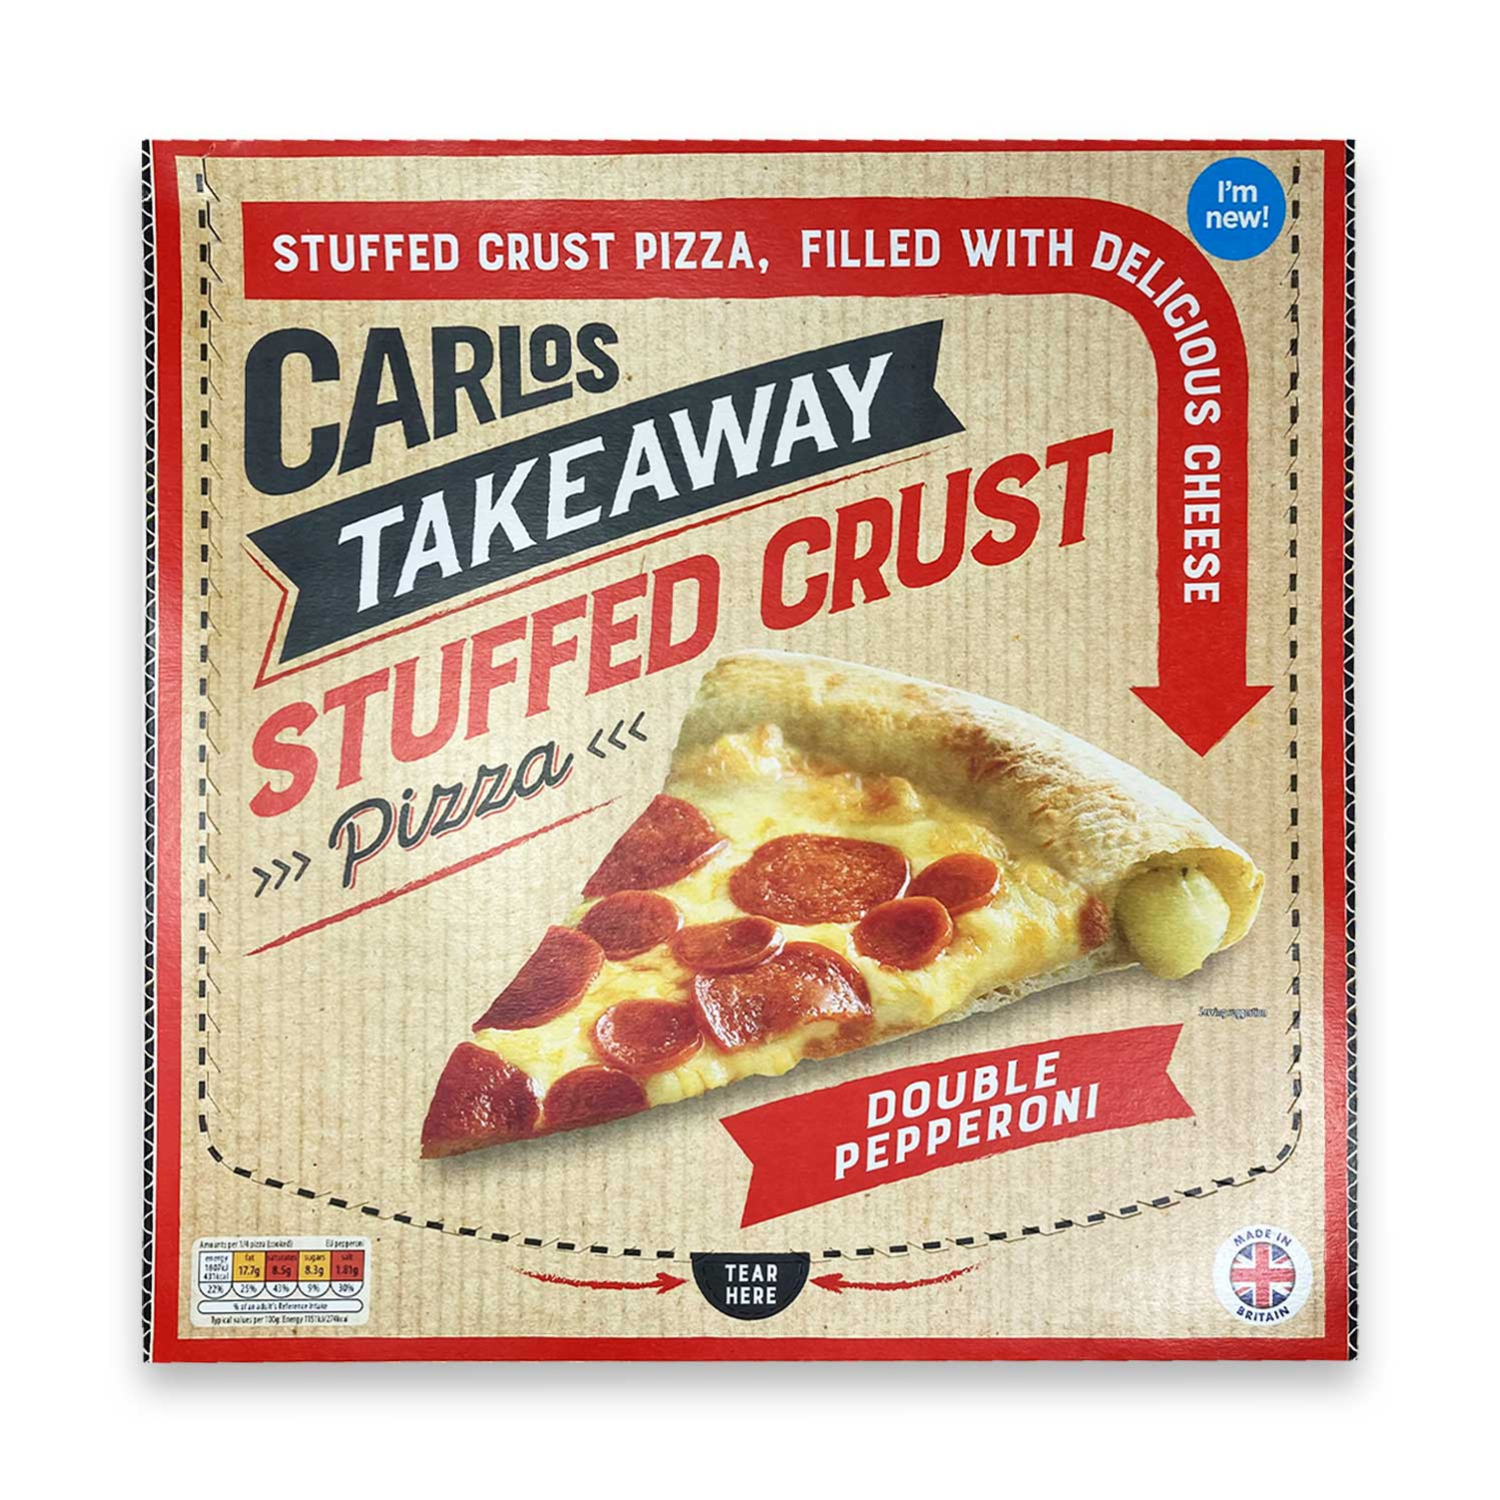 Has crust pizza stuffed who Stuffed crust